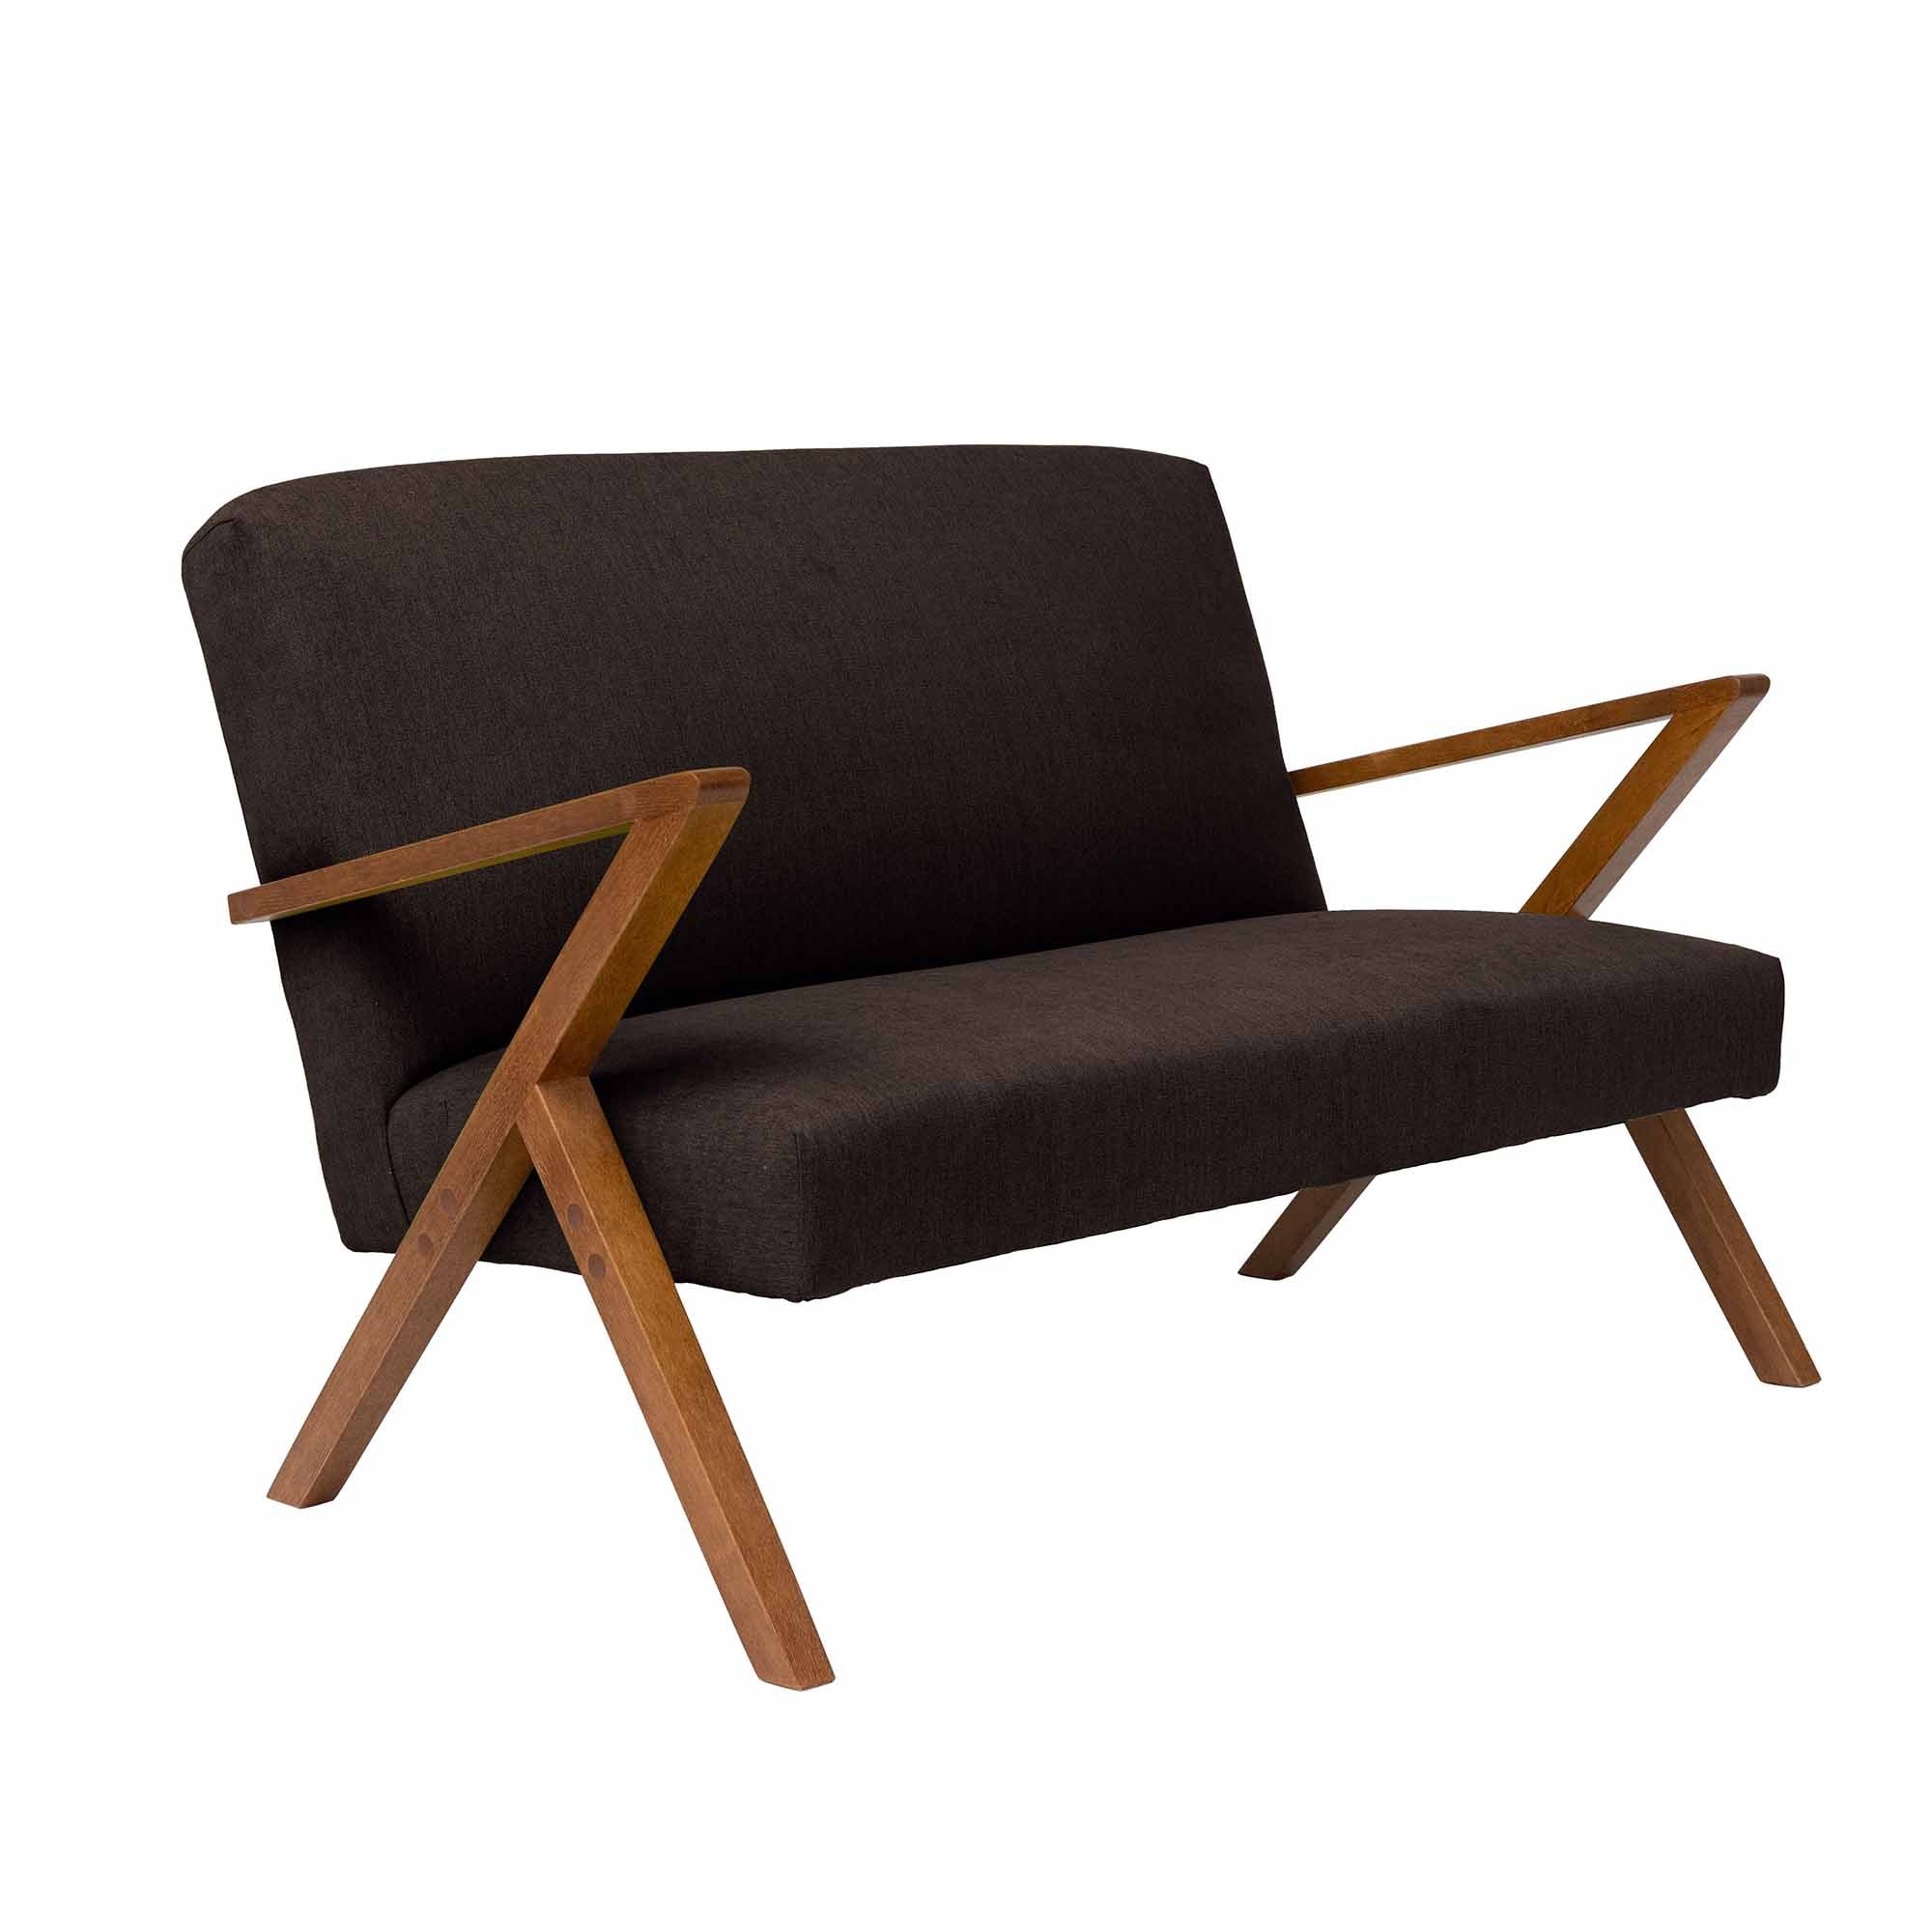  2-Seater Sofa, Beech Wood Frame, Walnut Colour brown fabric, half-side view